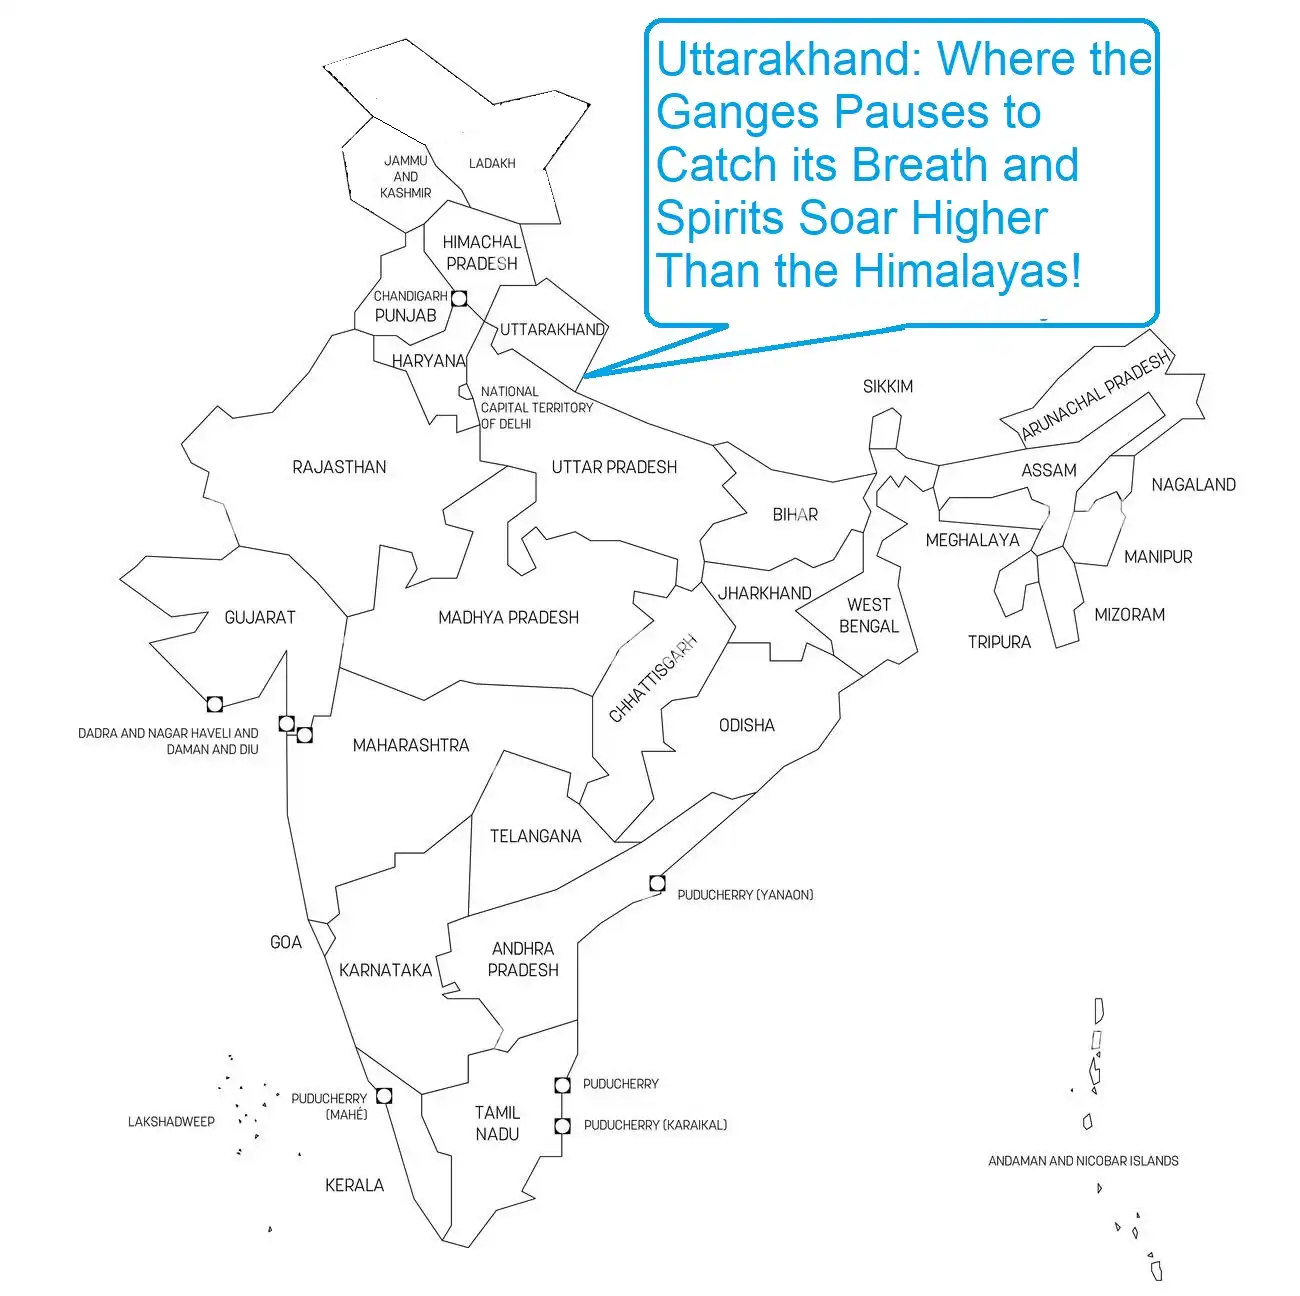 Uttarakhand: A Journey Through the Land of Gods